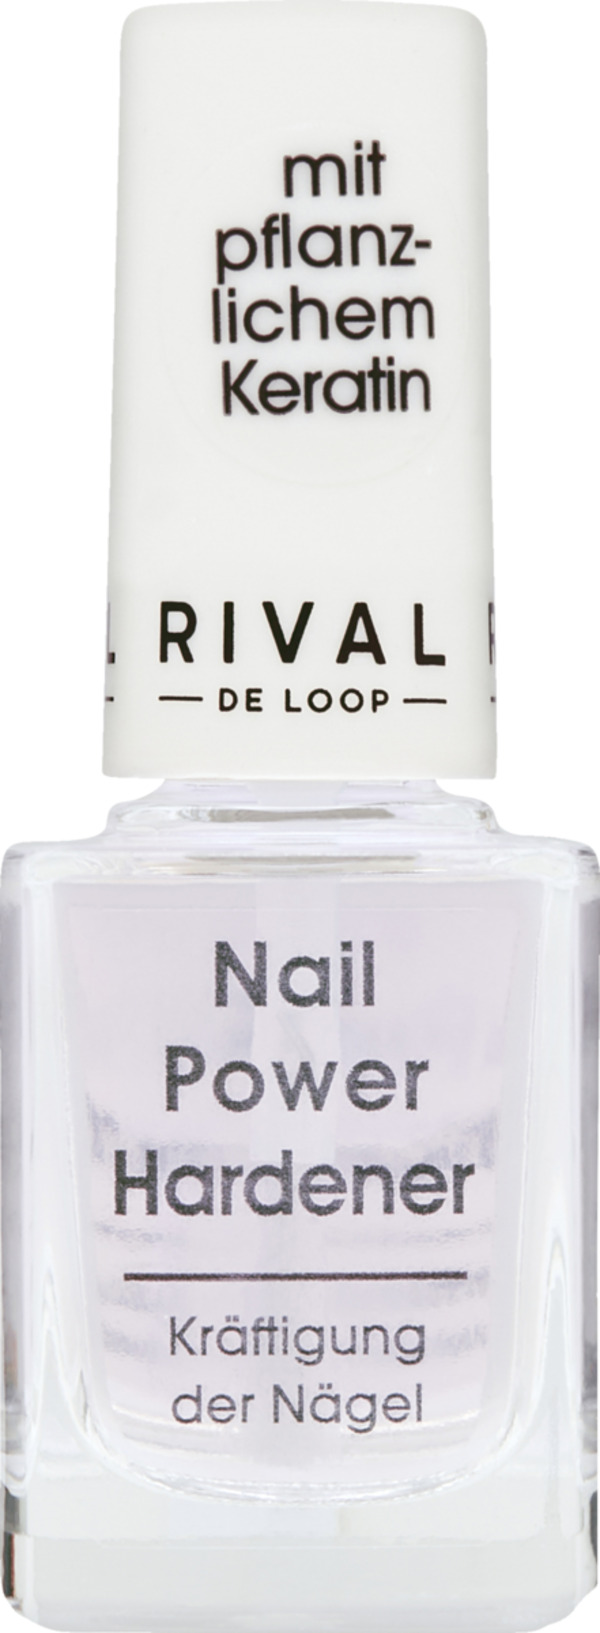 Bild 1 von RIVAL DE LOOP Nail Power Hardener